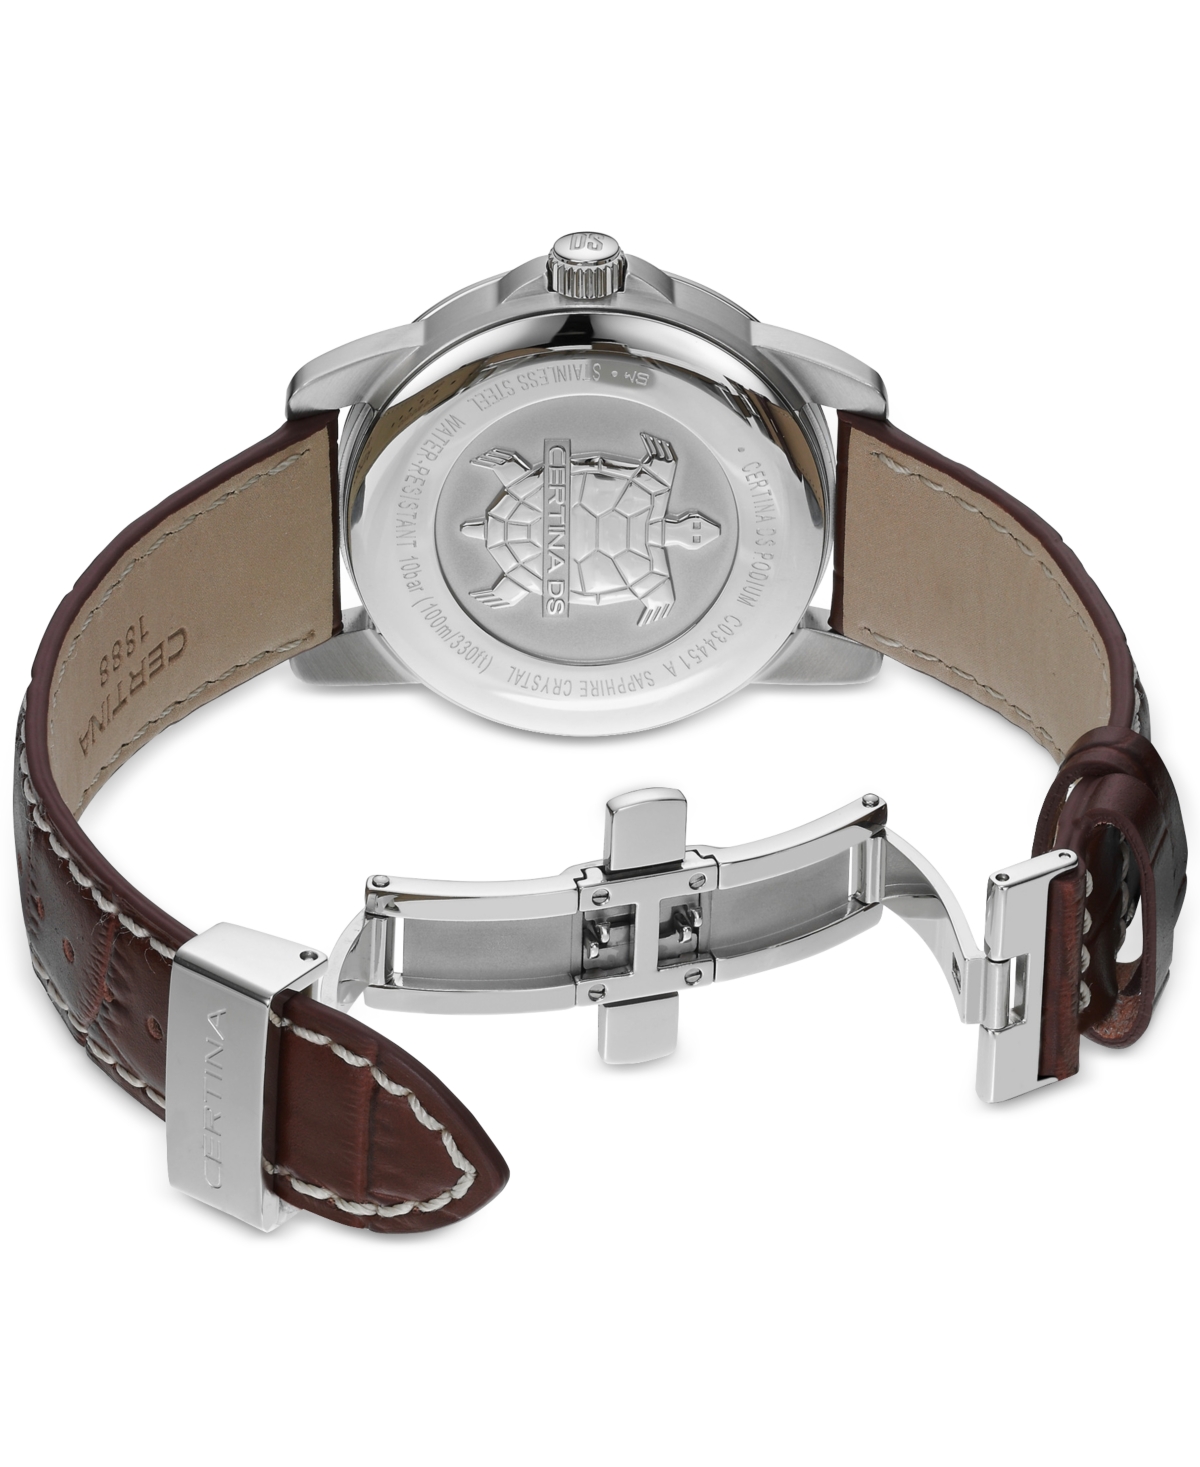 Shop Certina Men's Swiss Ds Podium Brown Leather Strap Watch 40mm In Black